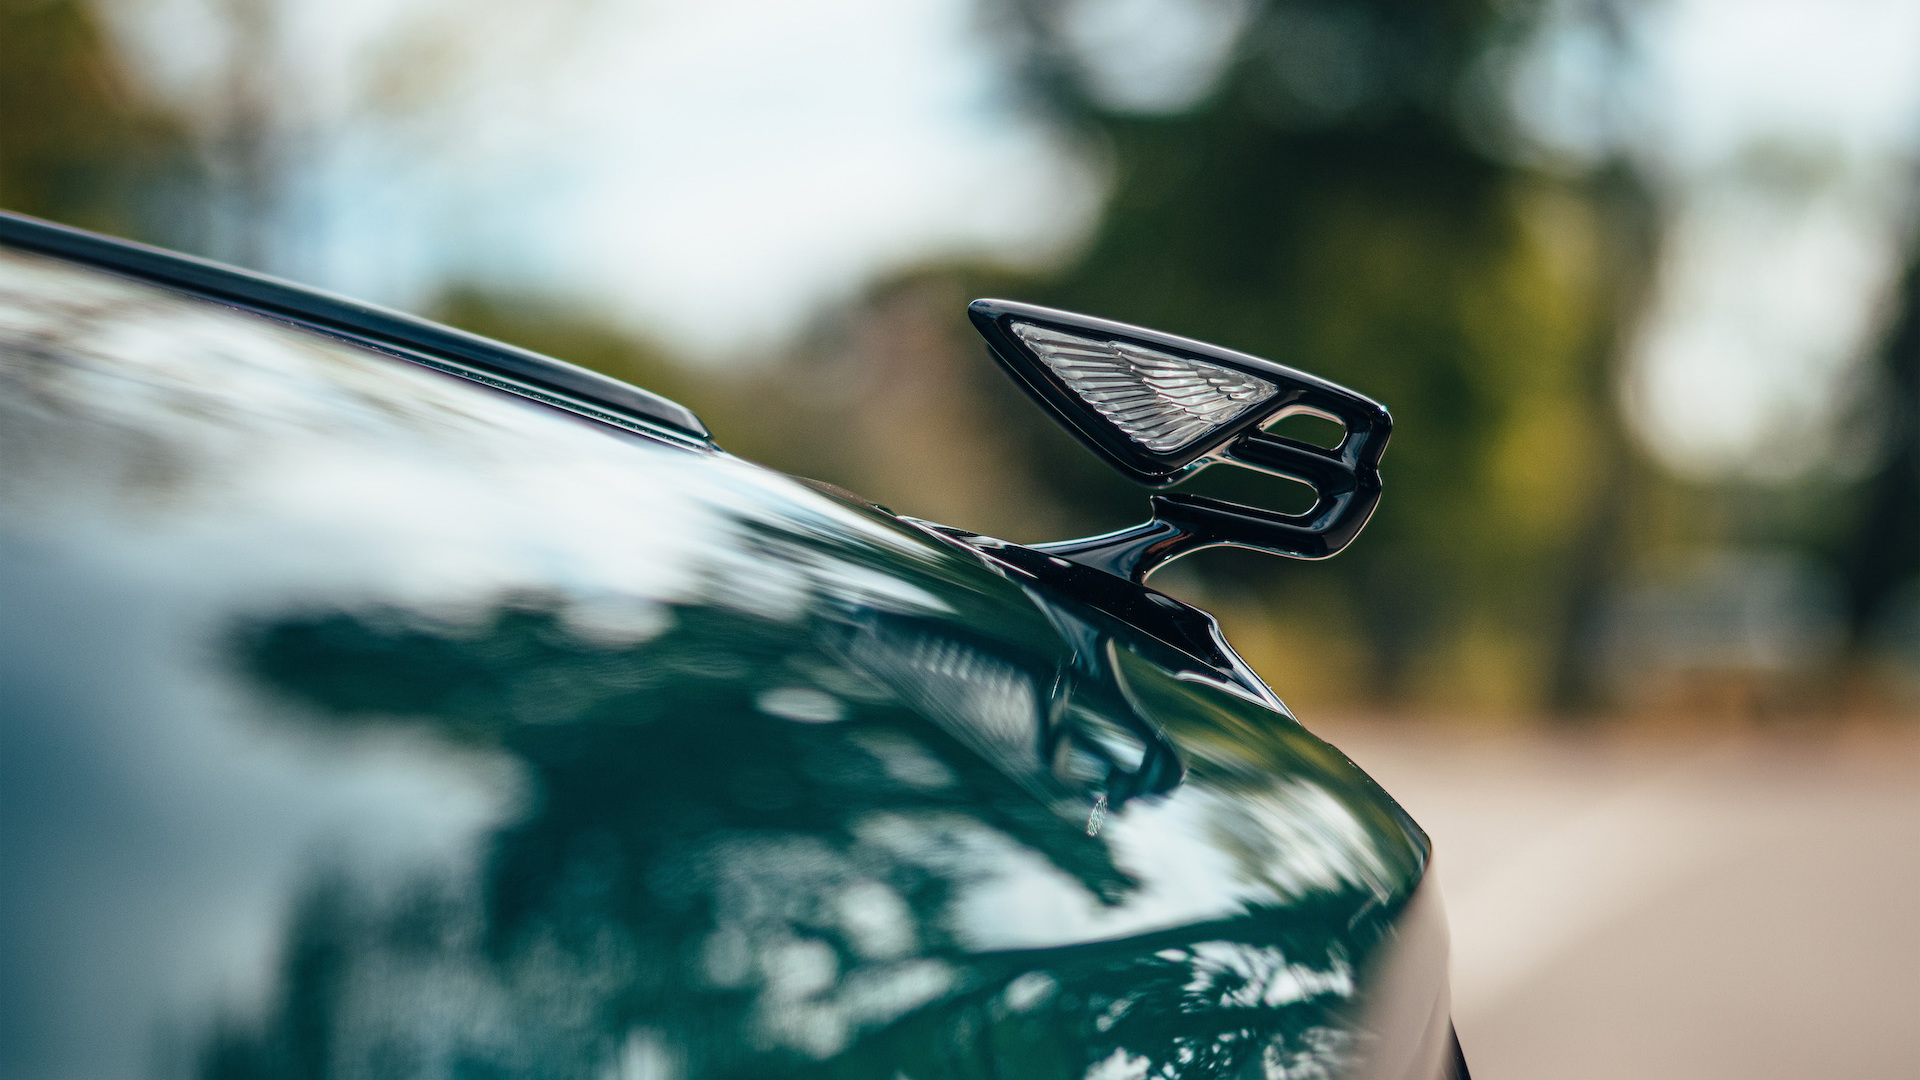 2022 Bentley Flying Spur Hybrid